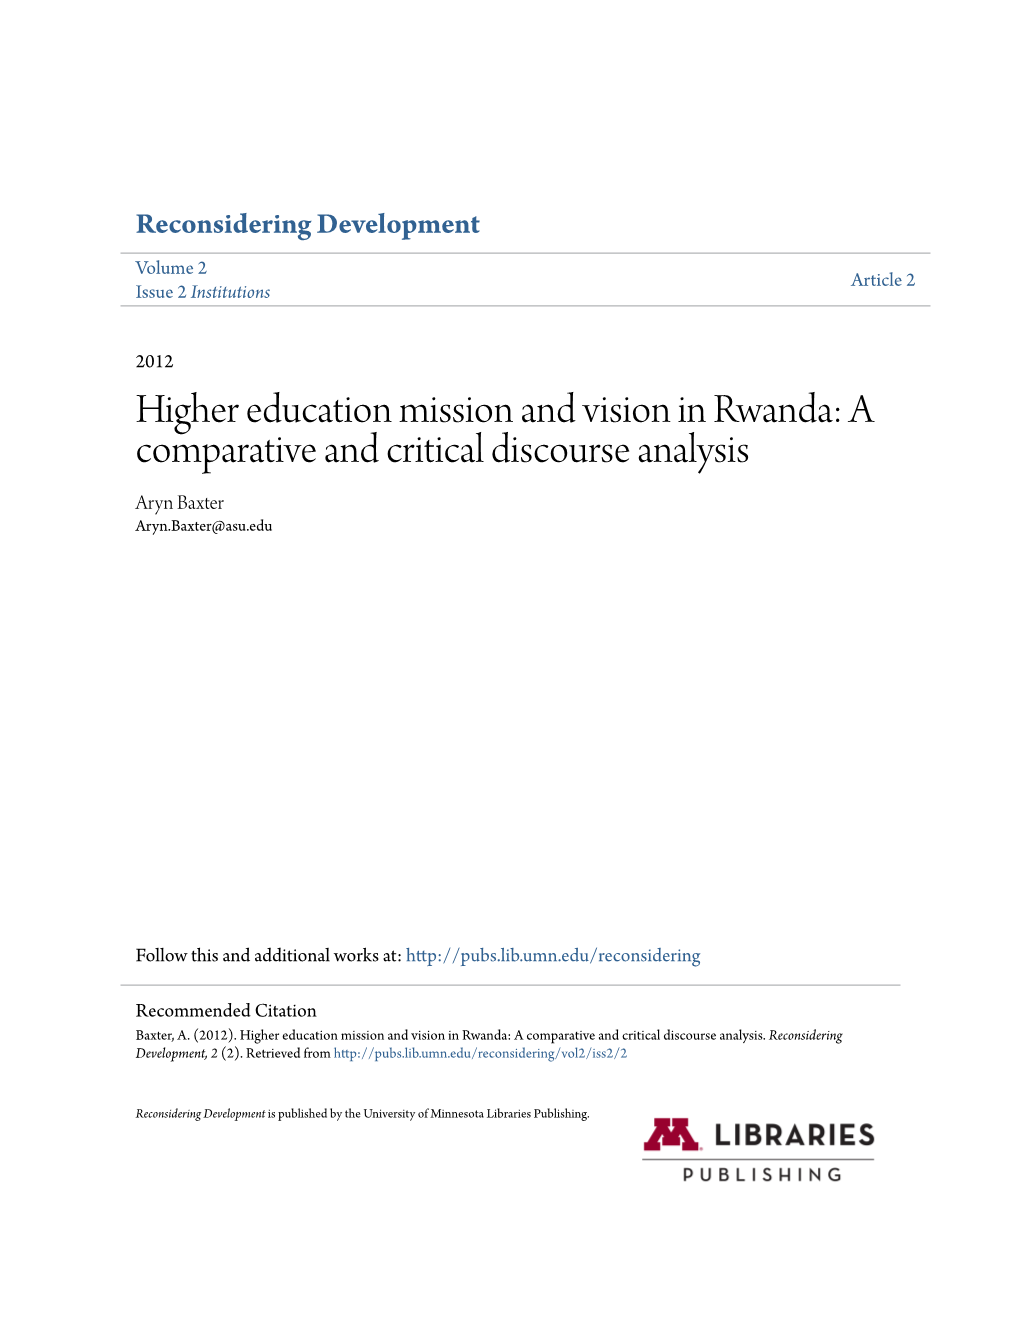 Higher Education Mission and Vision in Rwanda: a Comparative and Critical Discourse Analysis Aryn Baxter Aryn.Baxter@Asu.Edu